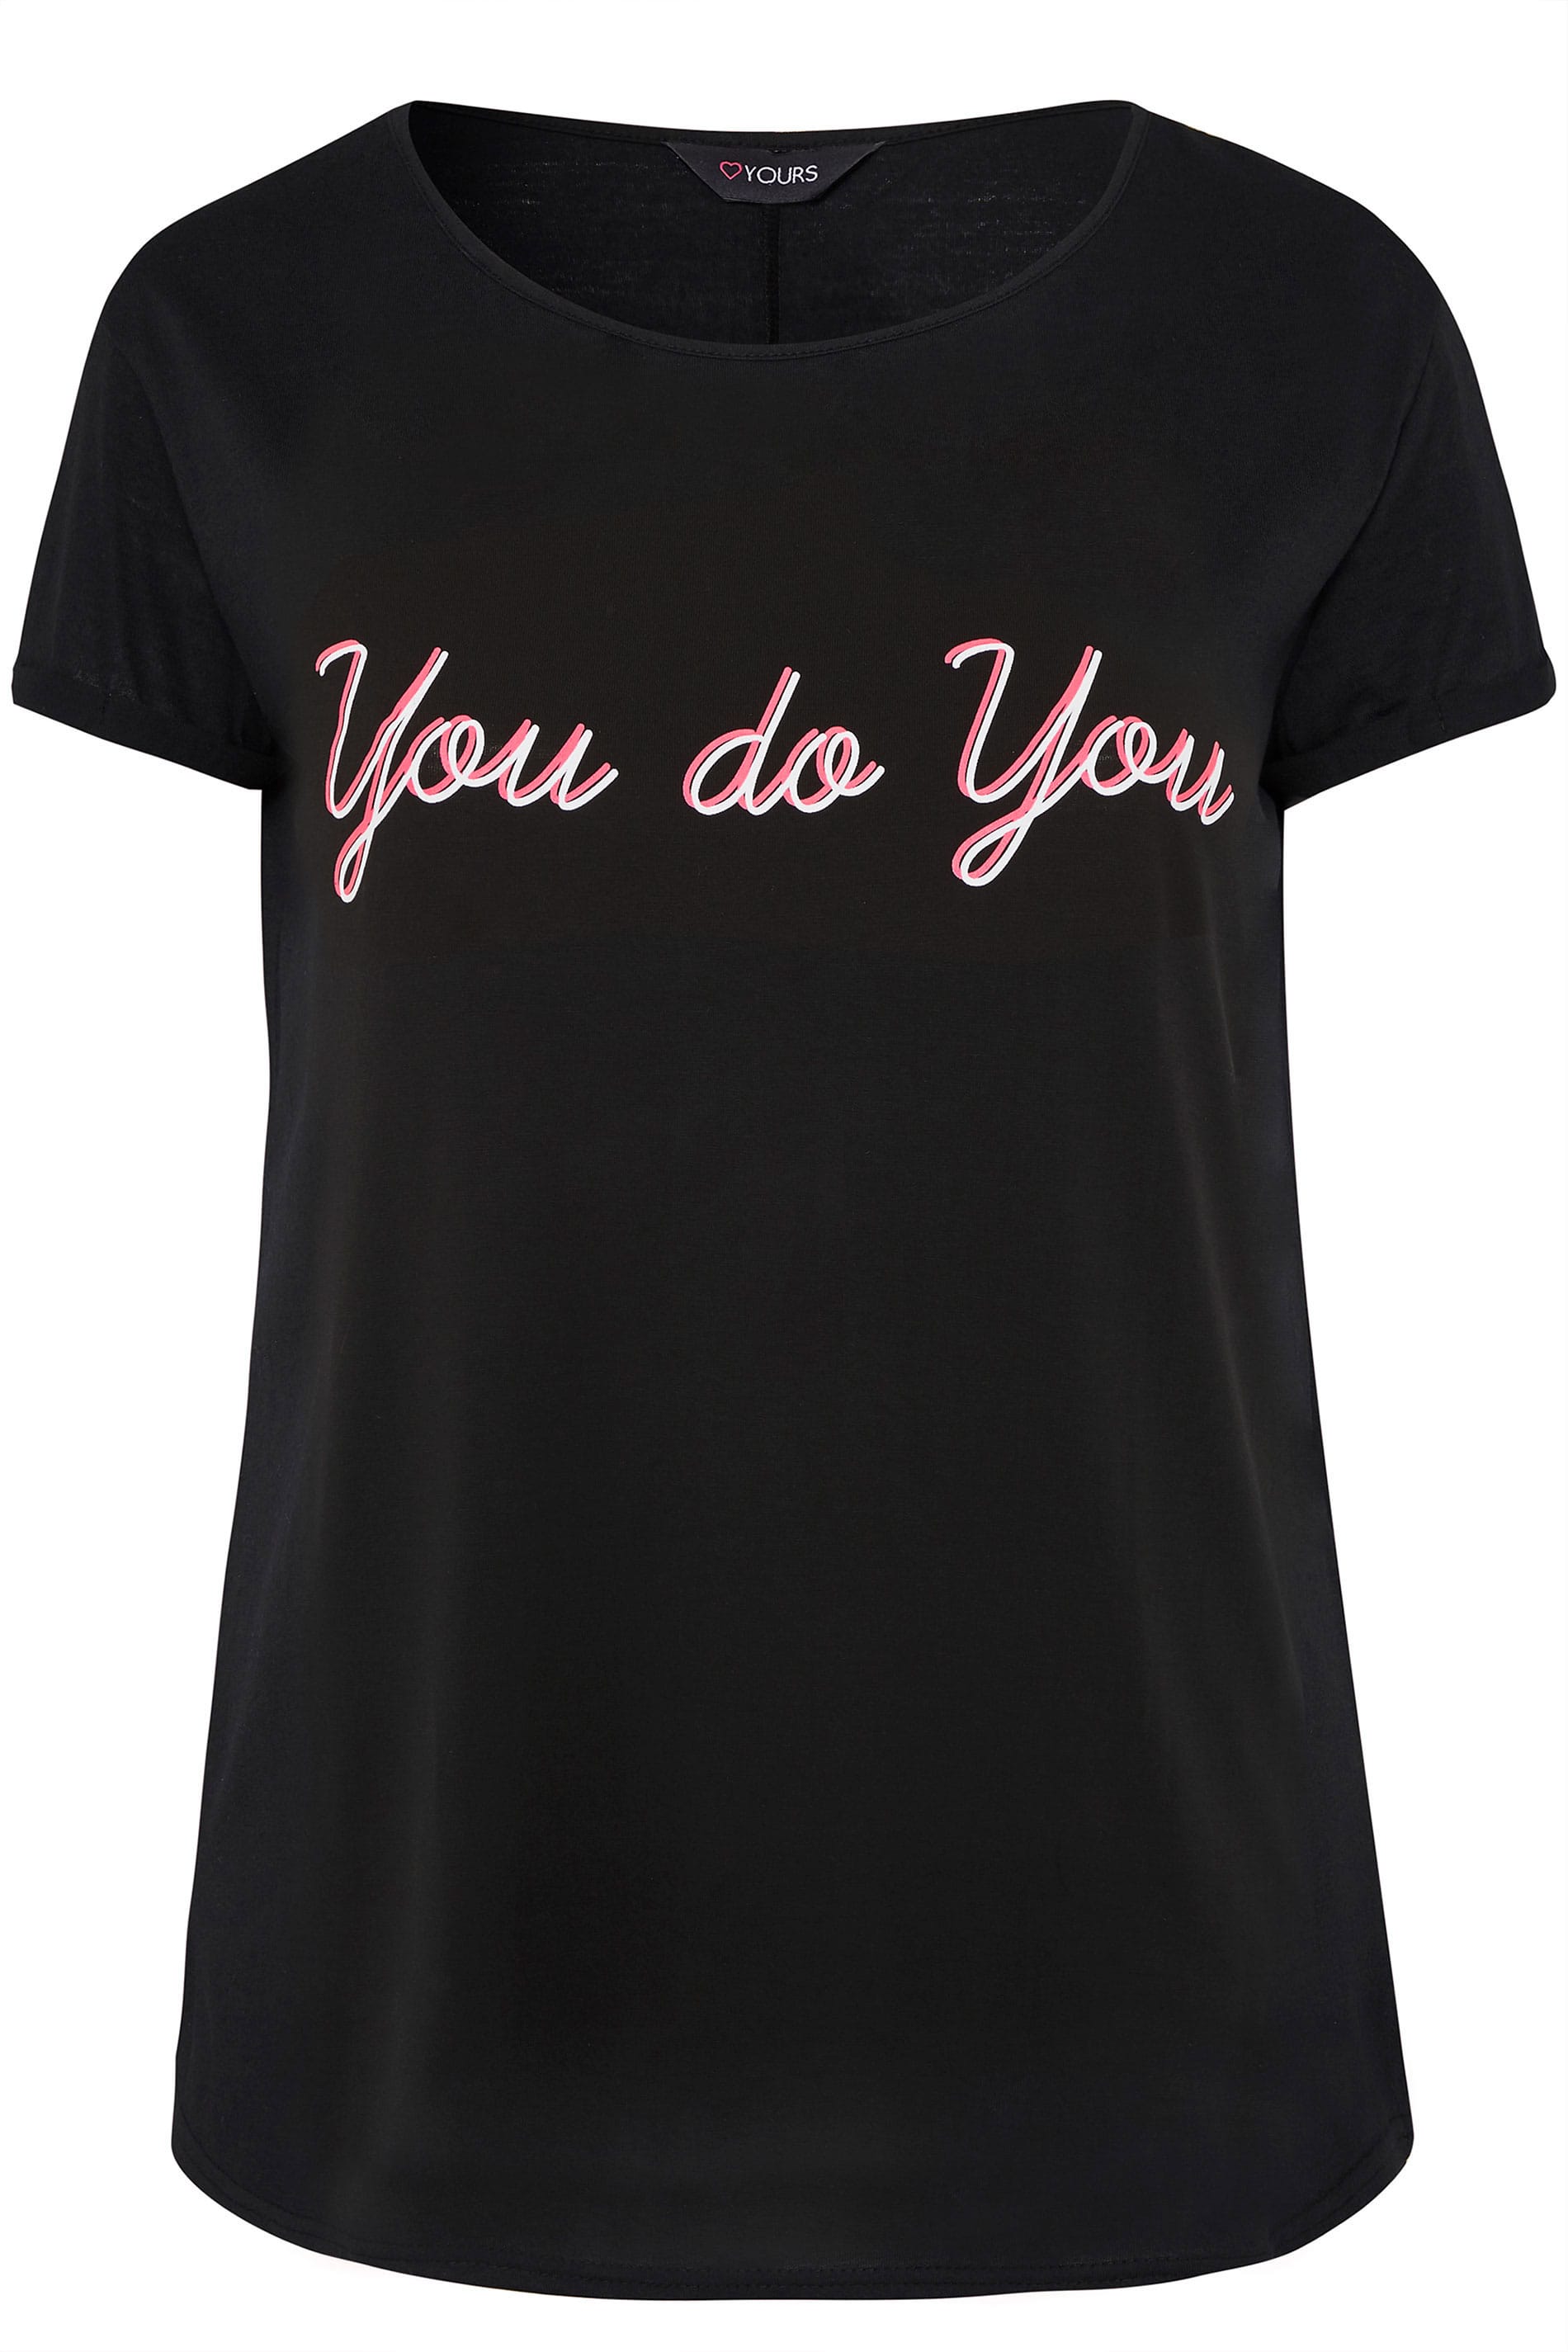 Black 'You Do You' Slogan T-Shirt | Yours Clothing